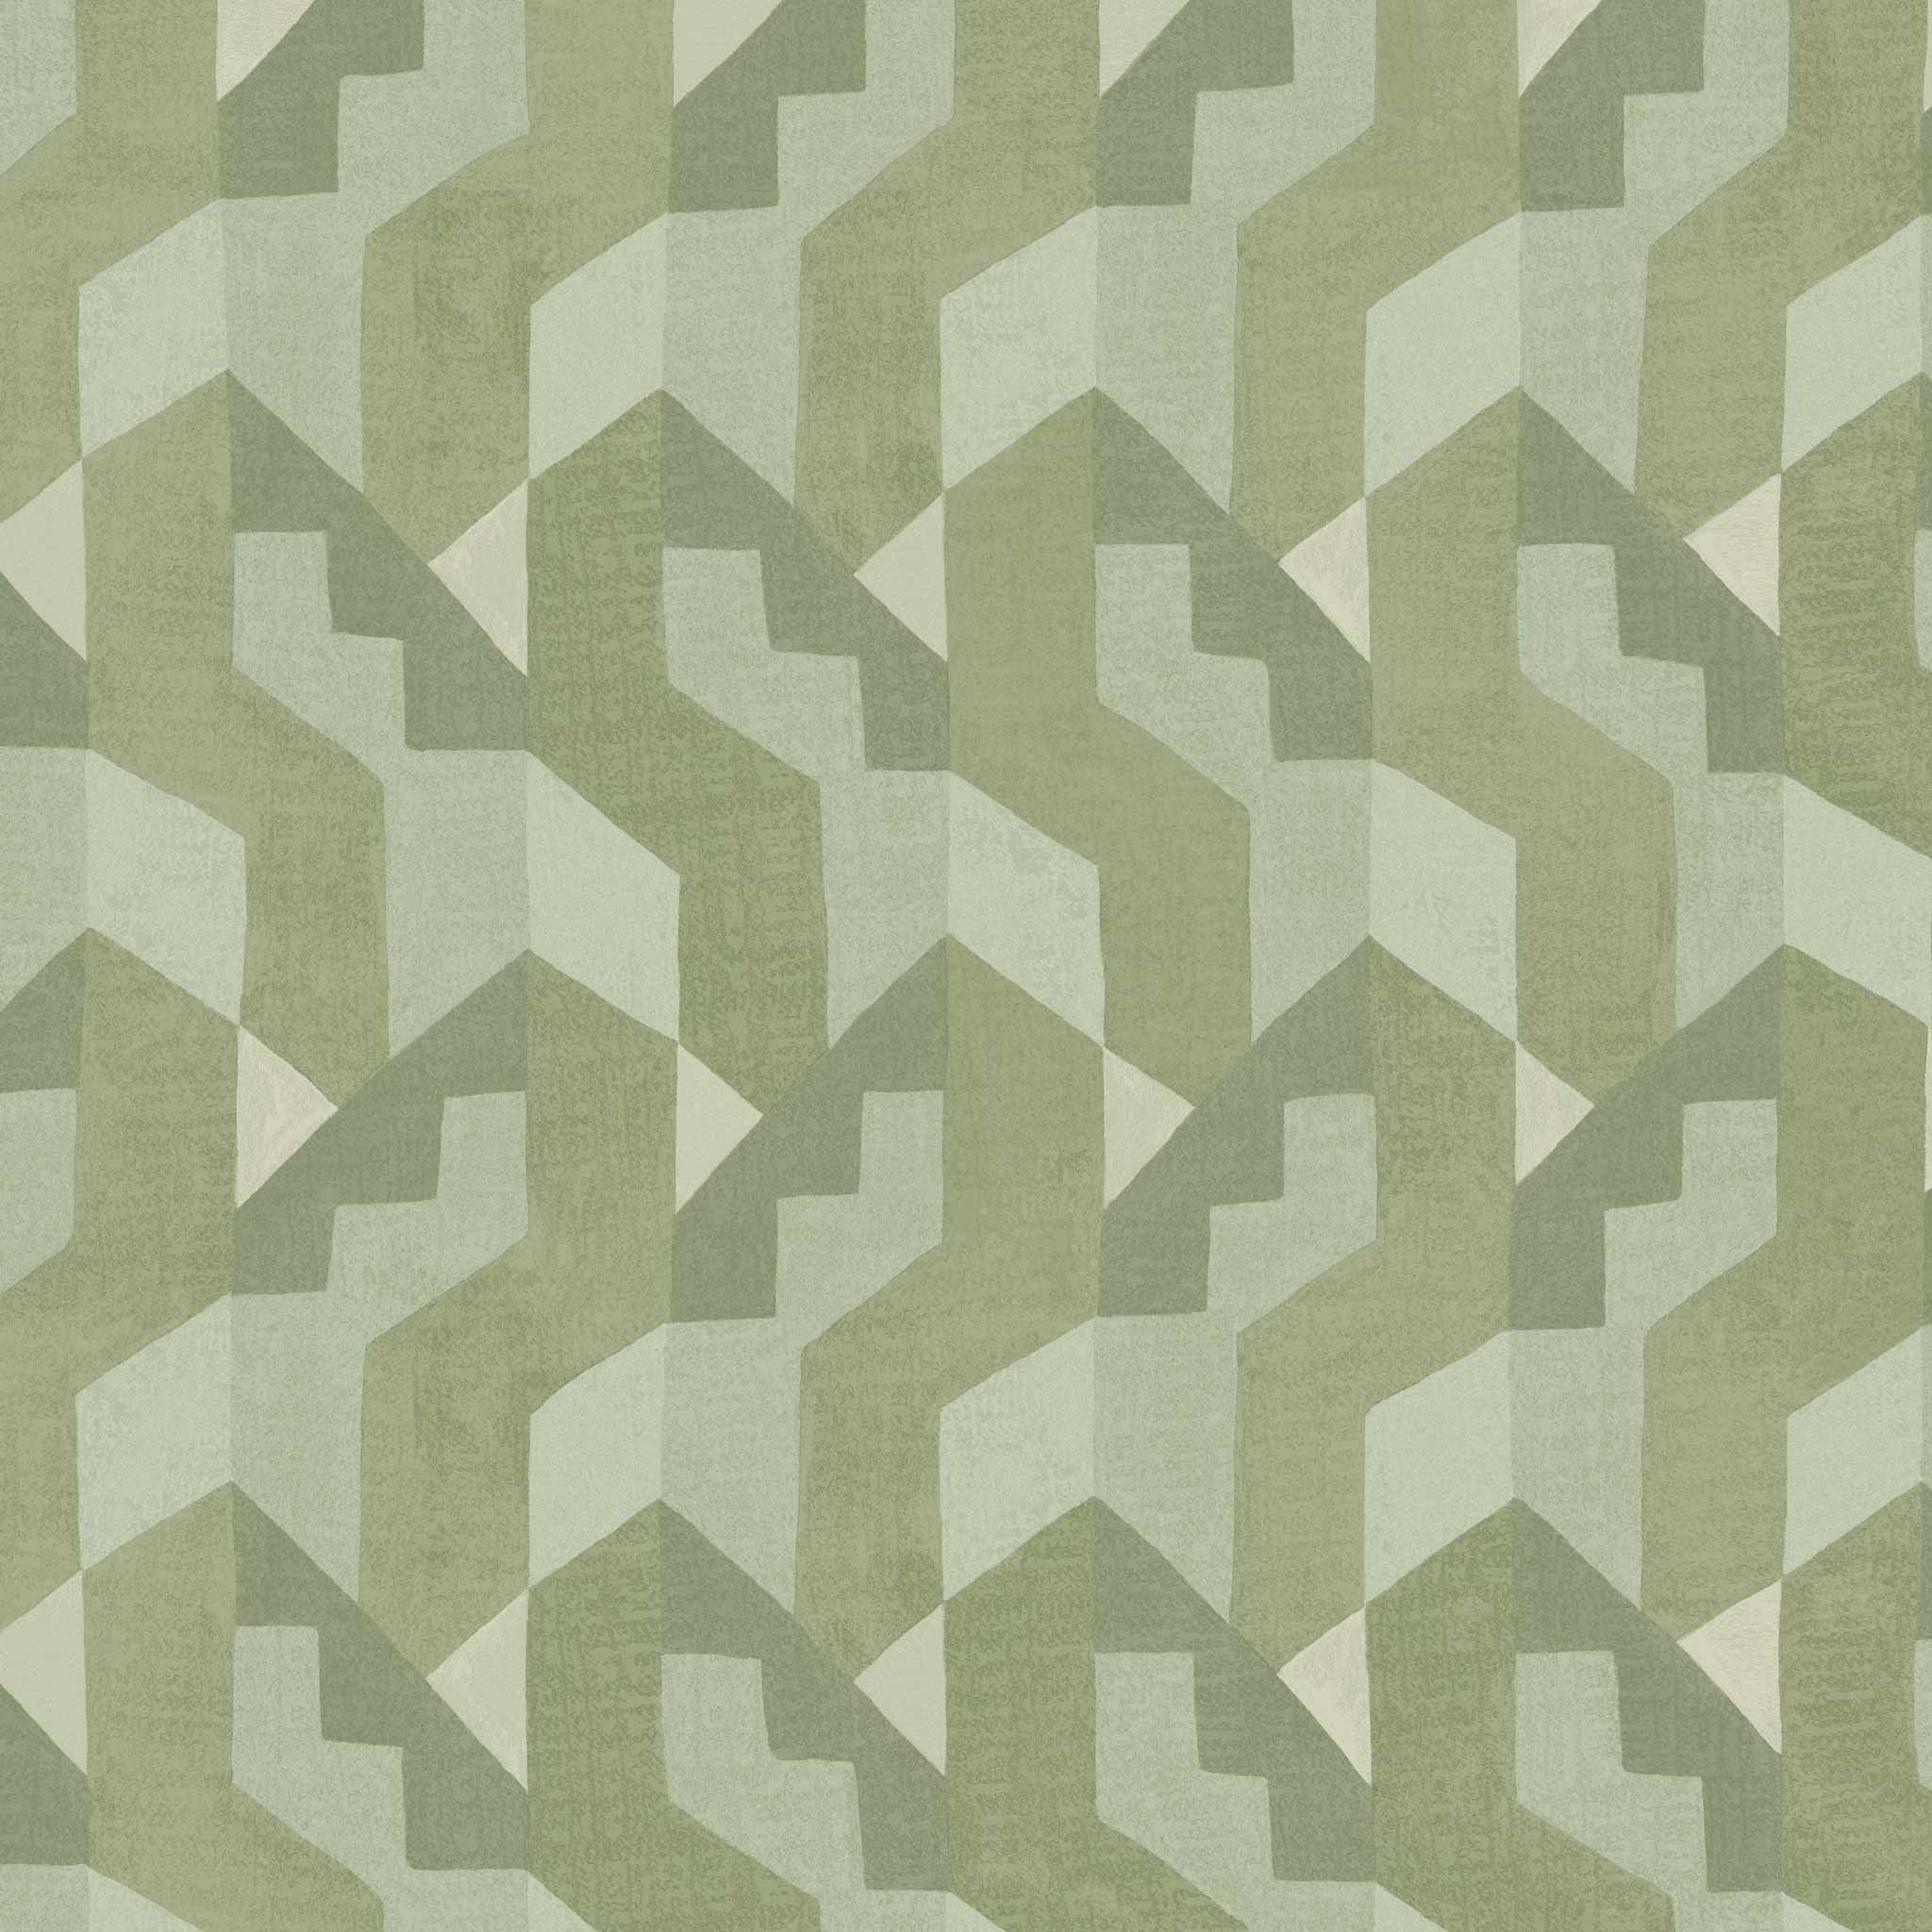 Habita wallpaper design - green grasscloth Gio pattern in Eucalyptus